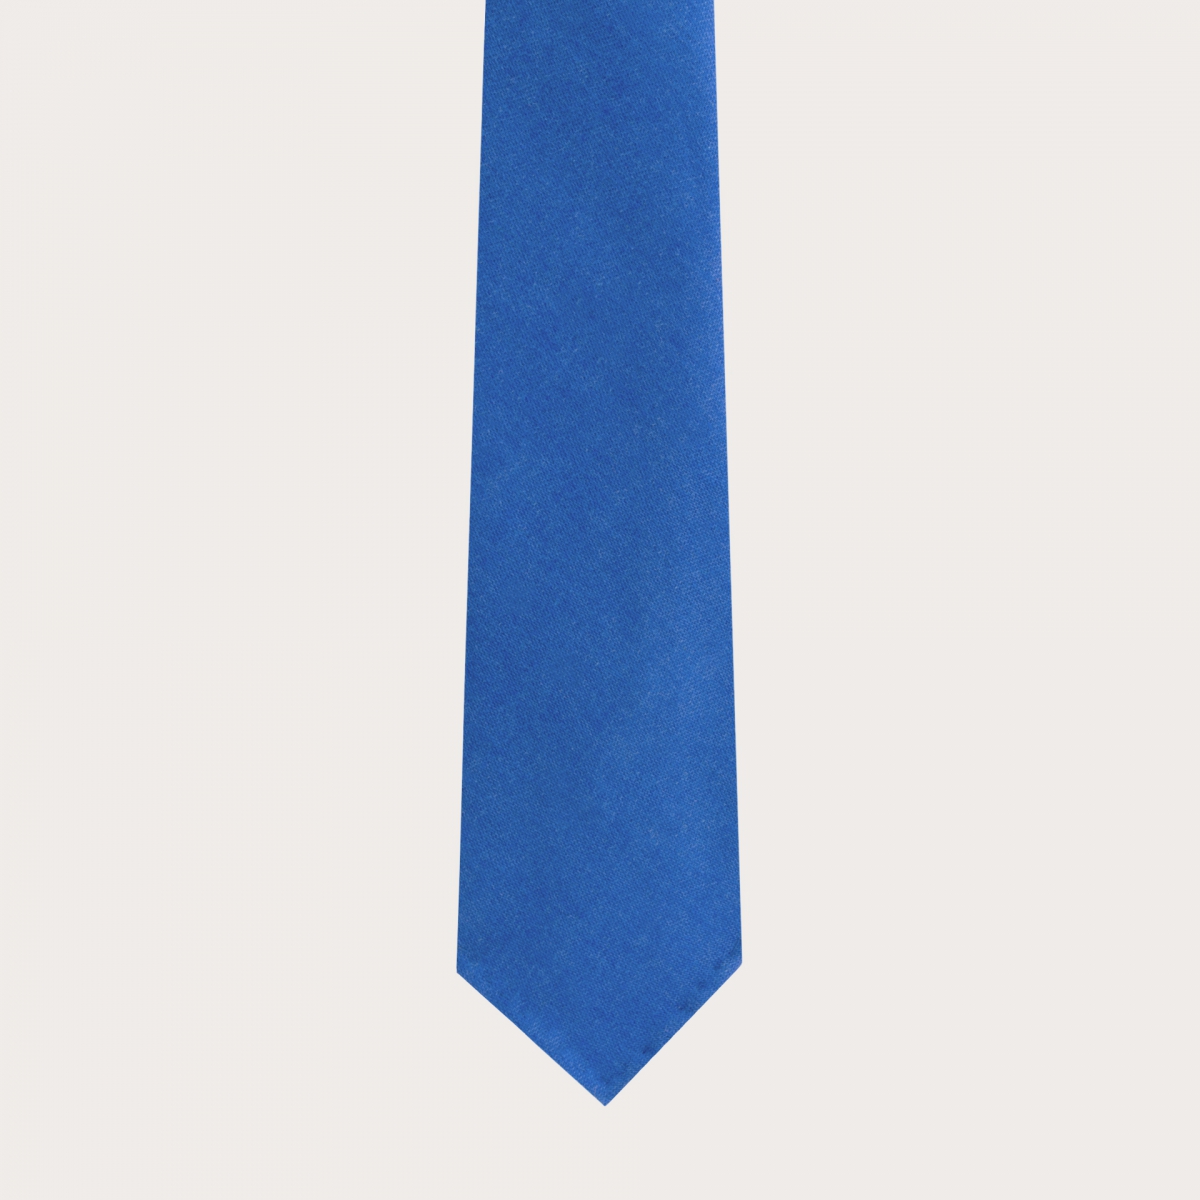 BRUCLE Ungefütterte Krawatte königsblau